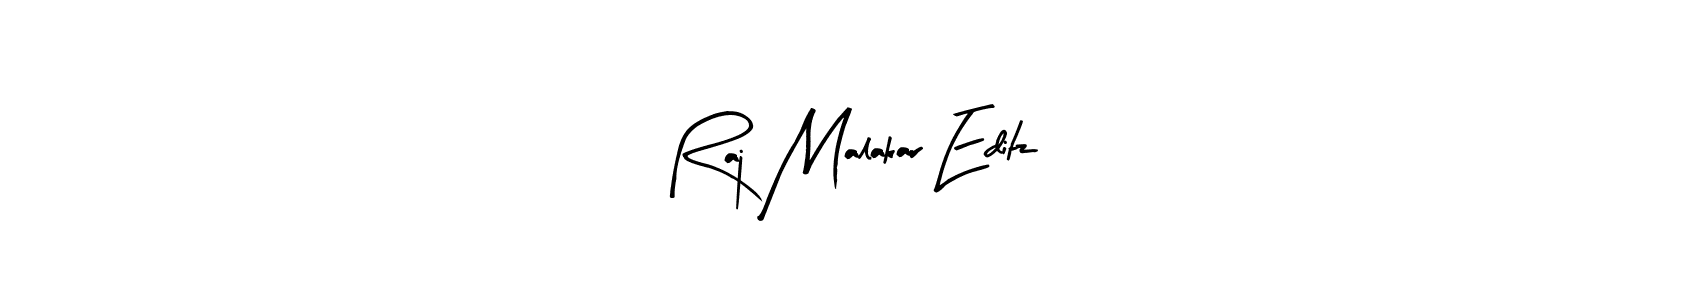 Make a beautiful signature design for name Raj Malakar Editz. Use this online signature maker to create a handwritten signature for free. Raj Malakar Editz signature style 8 images and pictures png